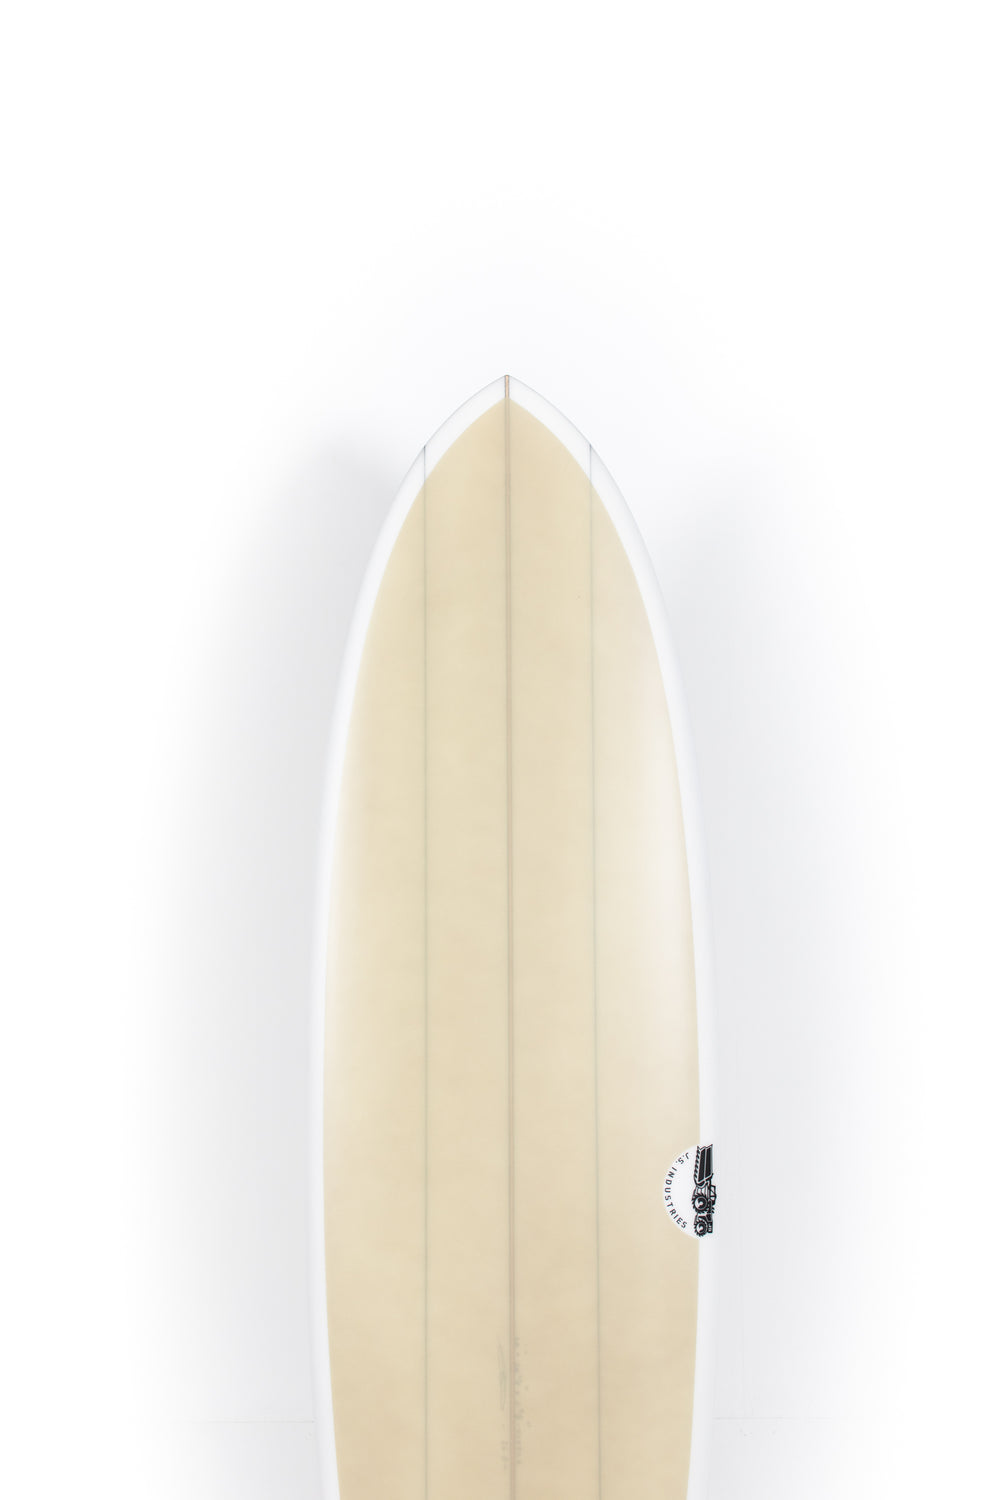 JS Surfboards - BIG BARON - 7'0